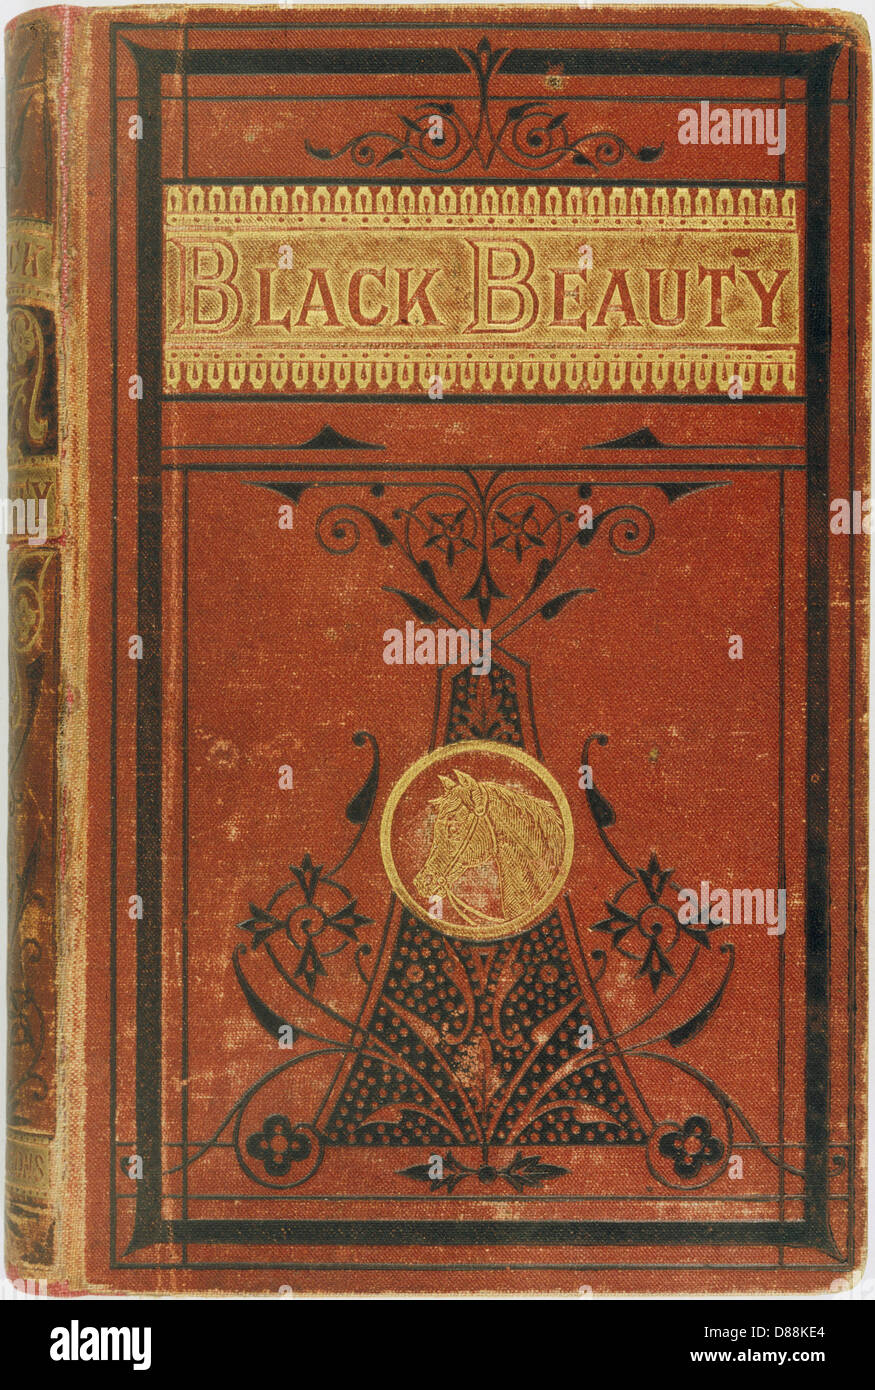 BLACK BEAUTY/BOOK Stock Photo